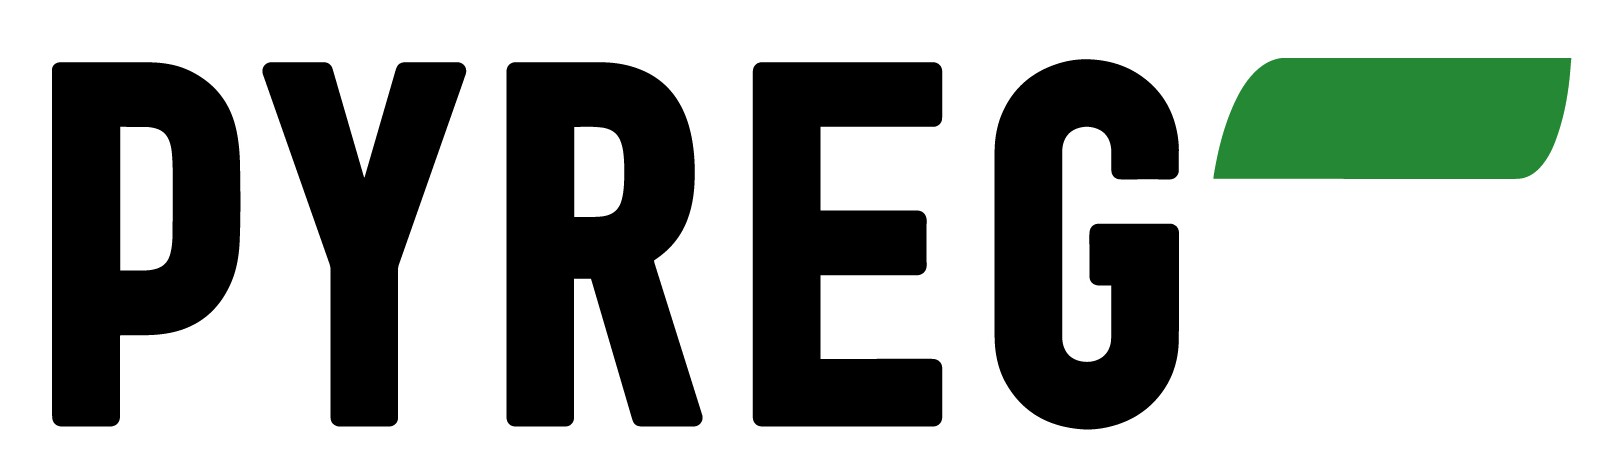 PYREG logo 2023